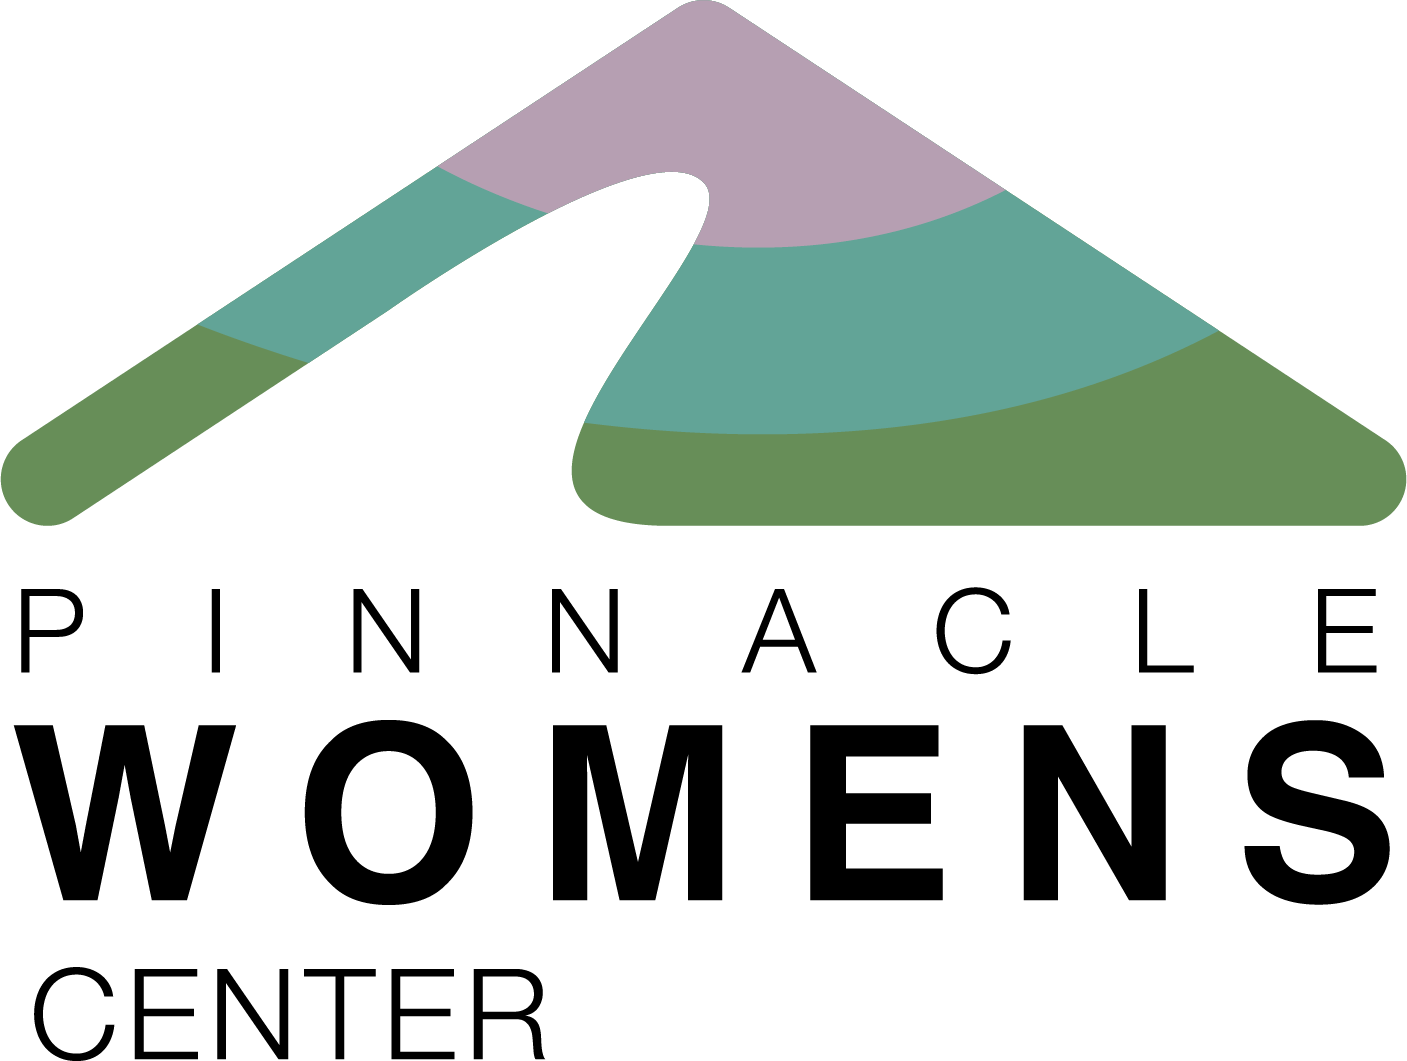 Pinnacle Women's Center